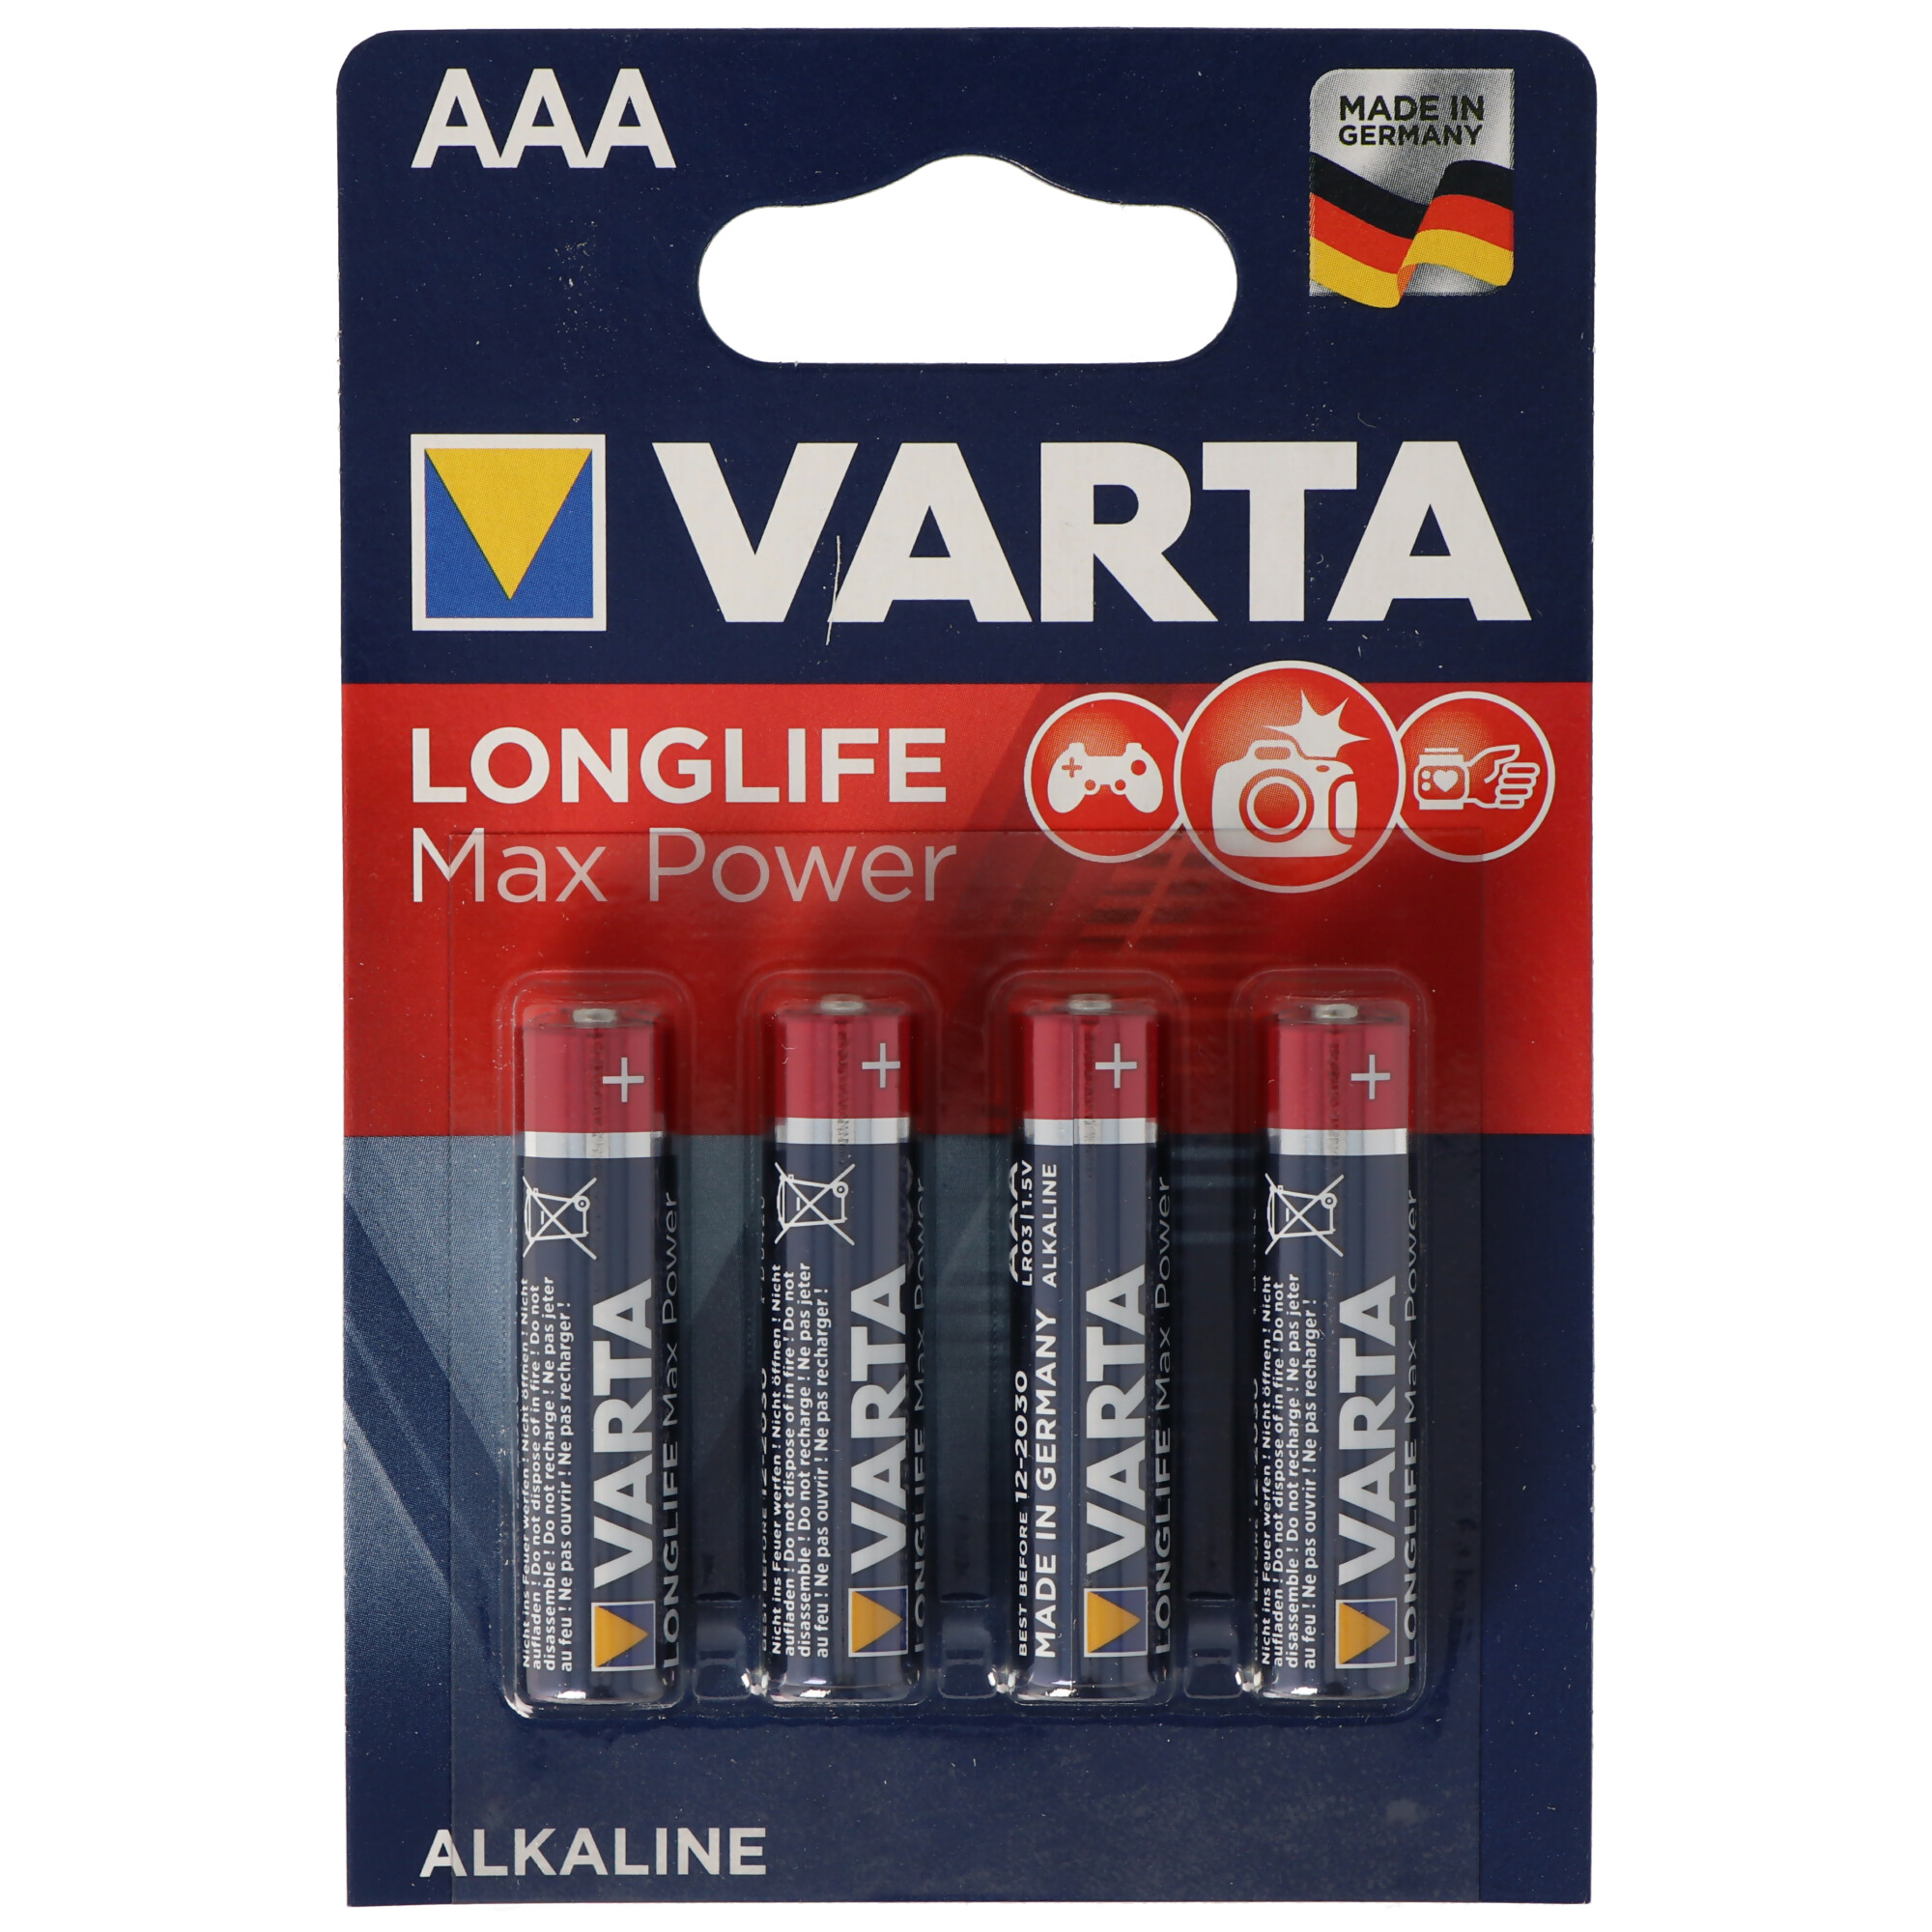 Varta Longlife Max Power (ehem. Max-Tech) 4703 Micro AAA 4-er Blister